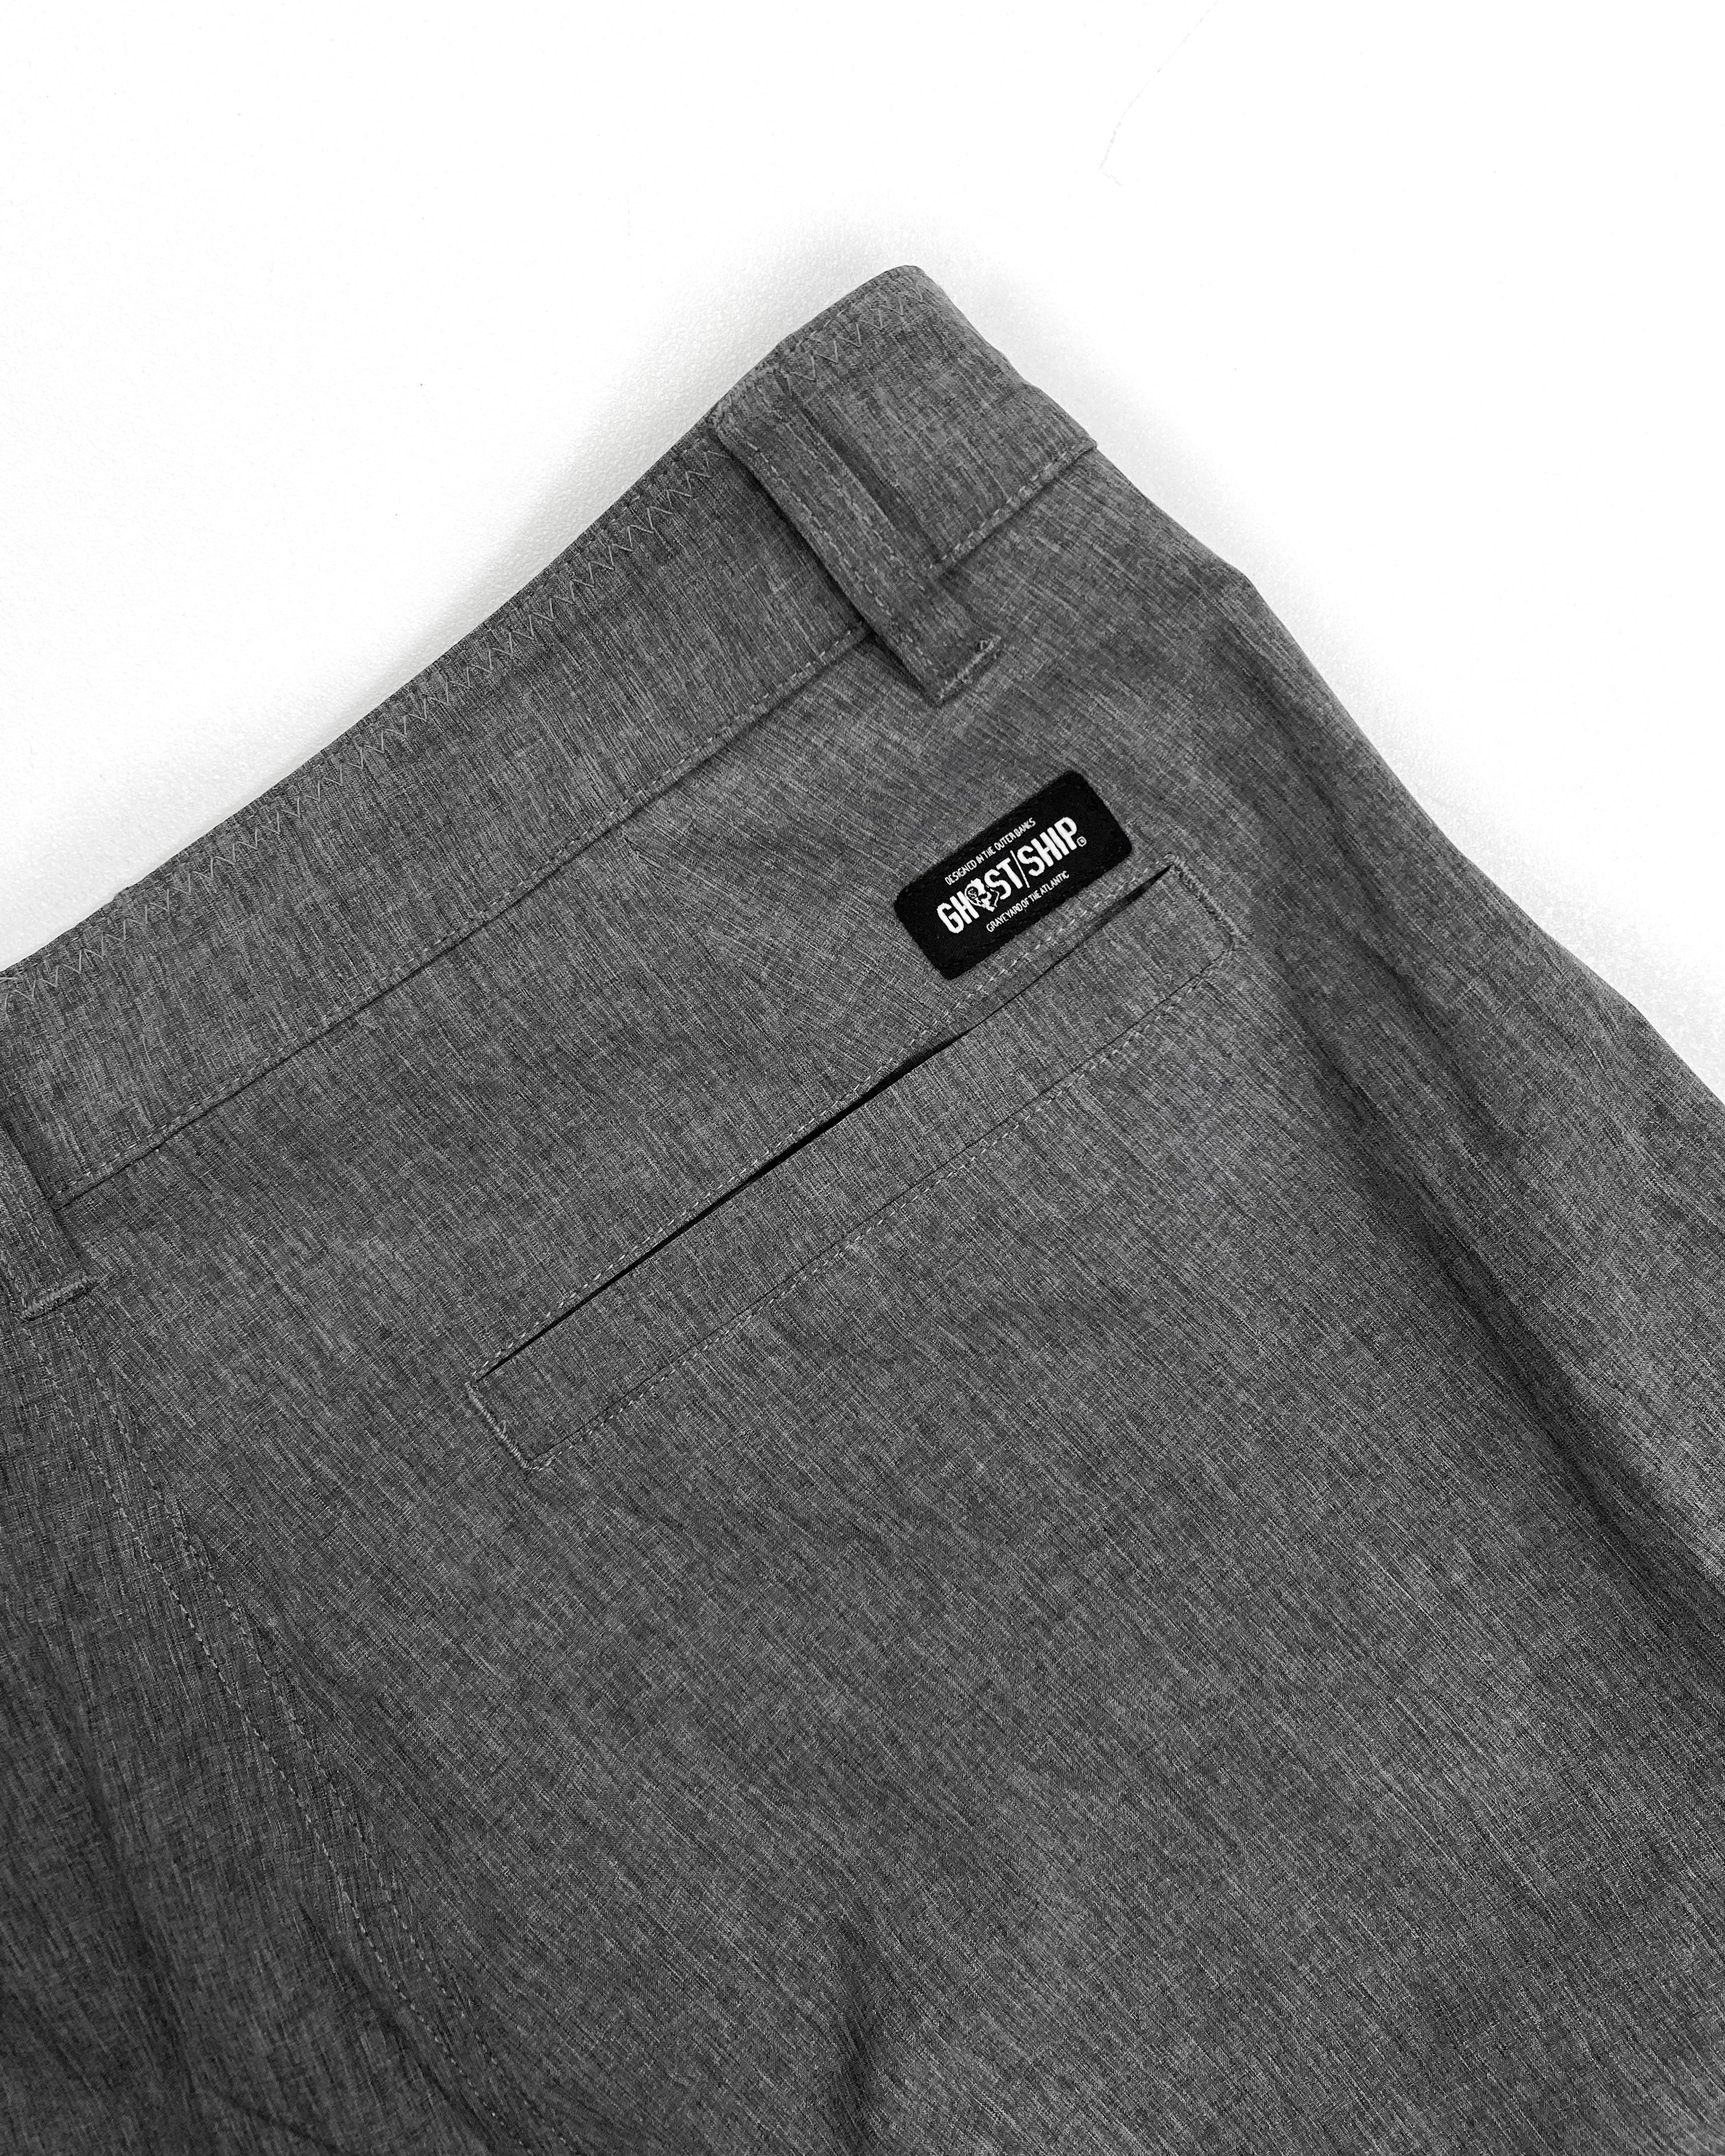 Hybrid Shorts - Charcoal - GHOSTSHIP.Supply